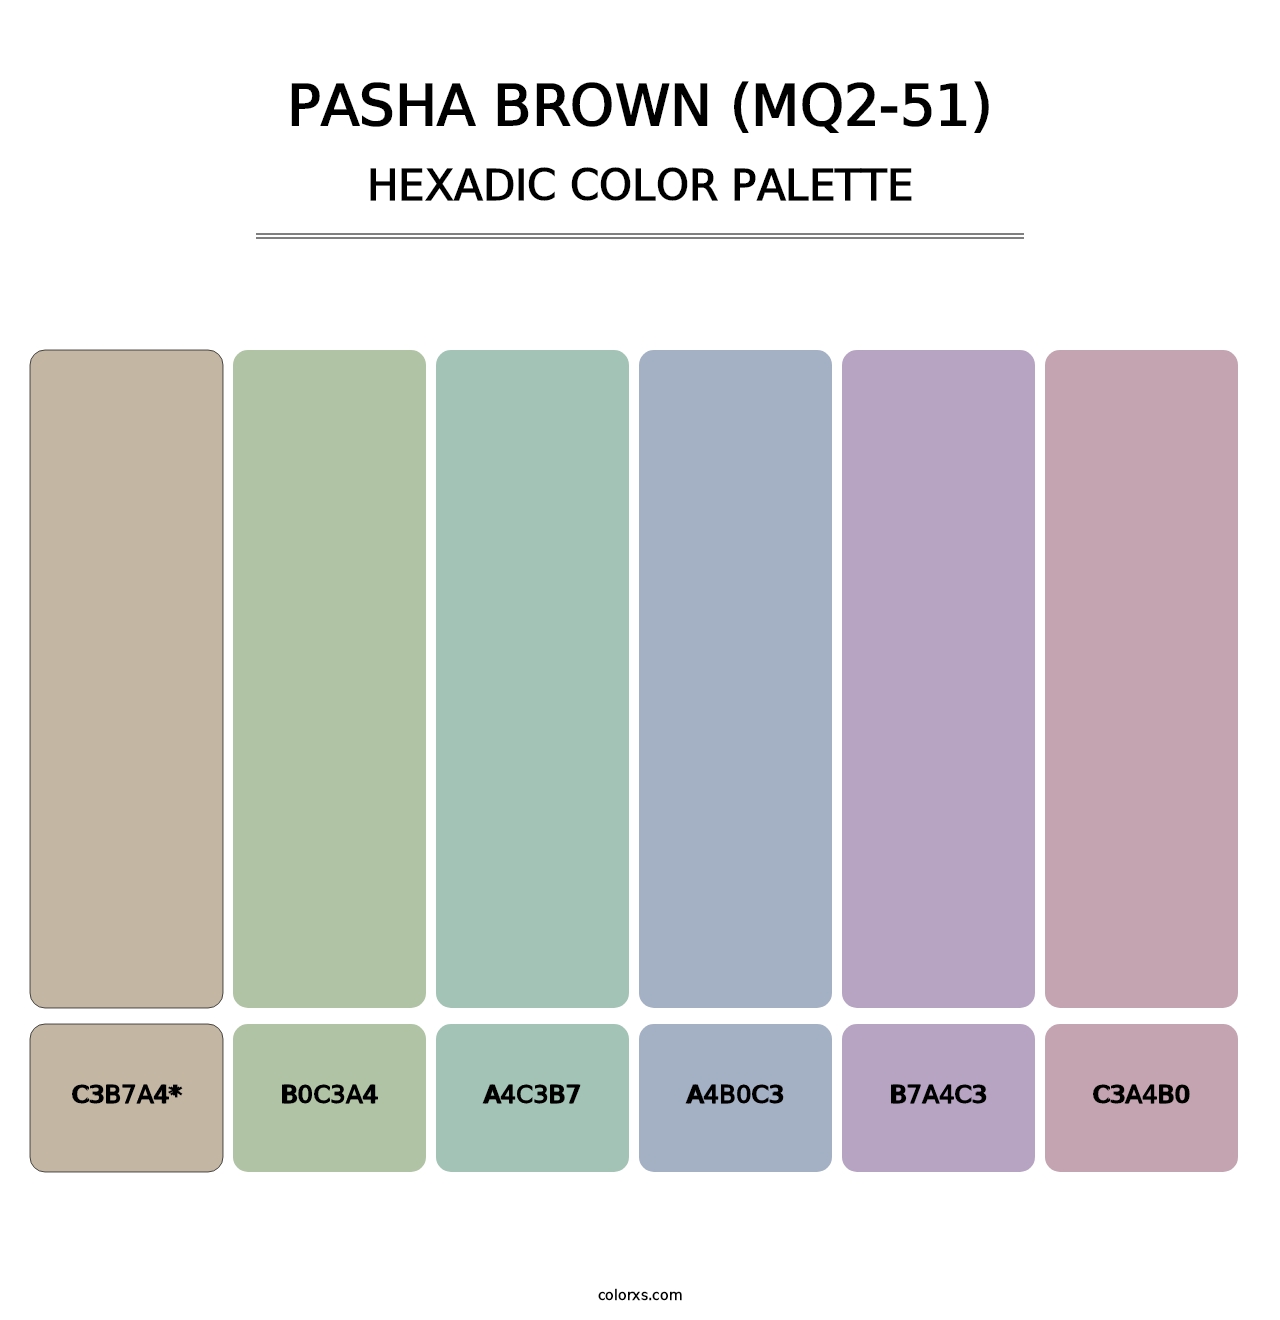 Pasha Brown (MQ2-51) - Hexadic Color Palette